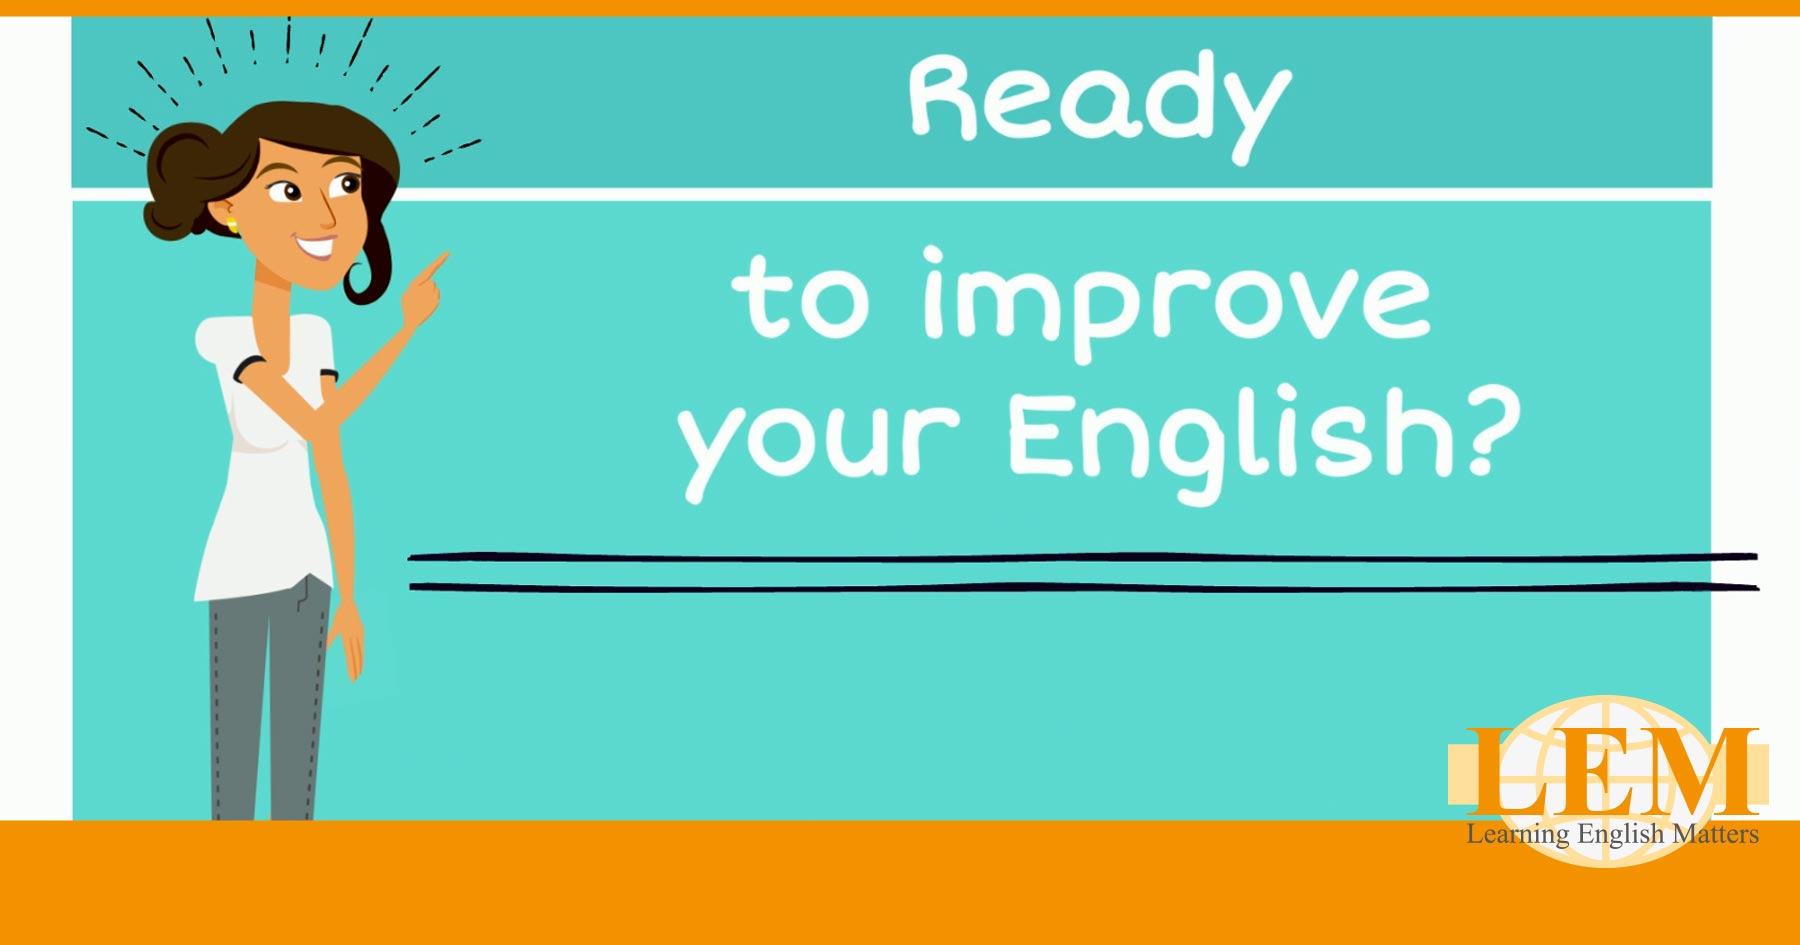 English matters. Let's improve your English! Фон. Фидбэк по английски. Deduce перевод.